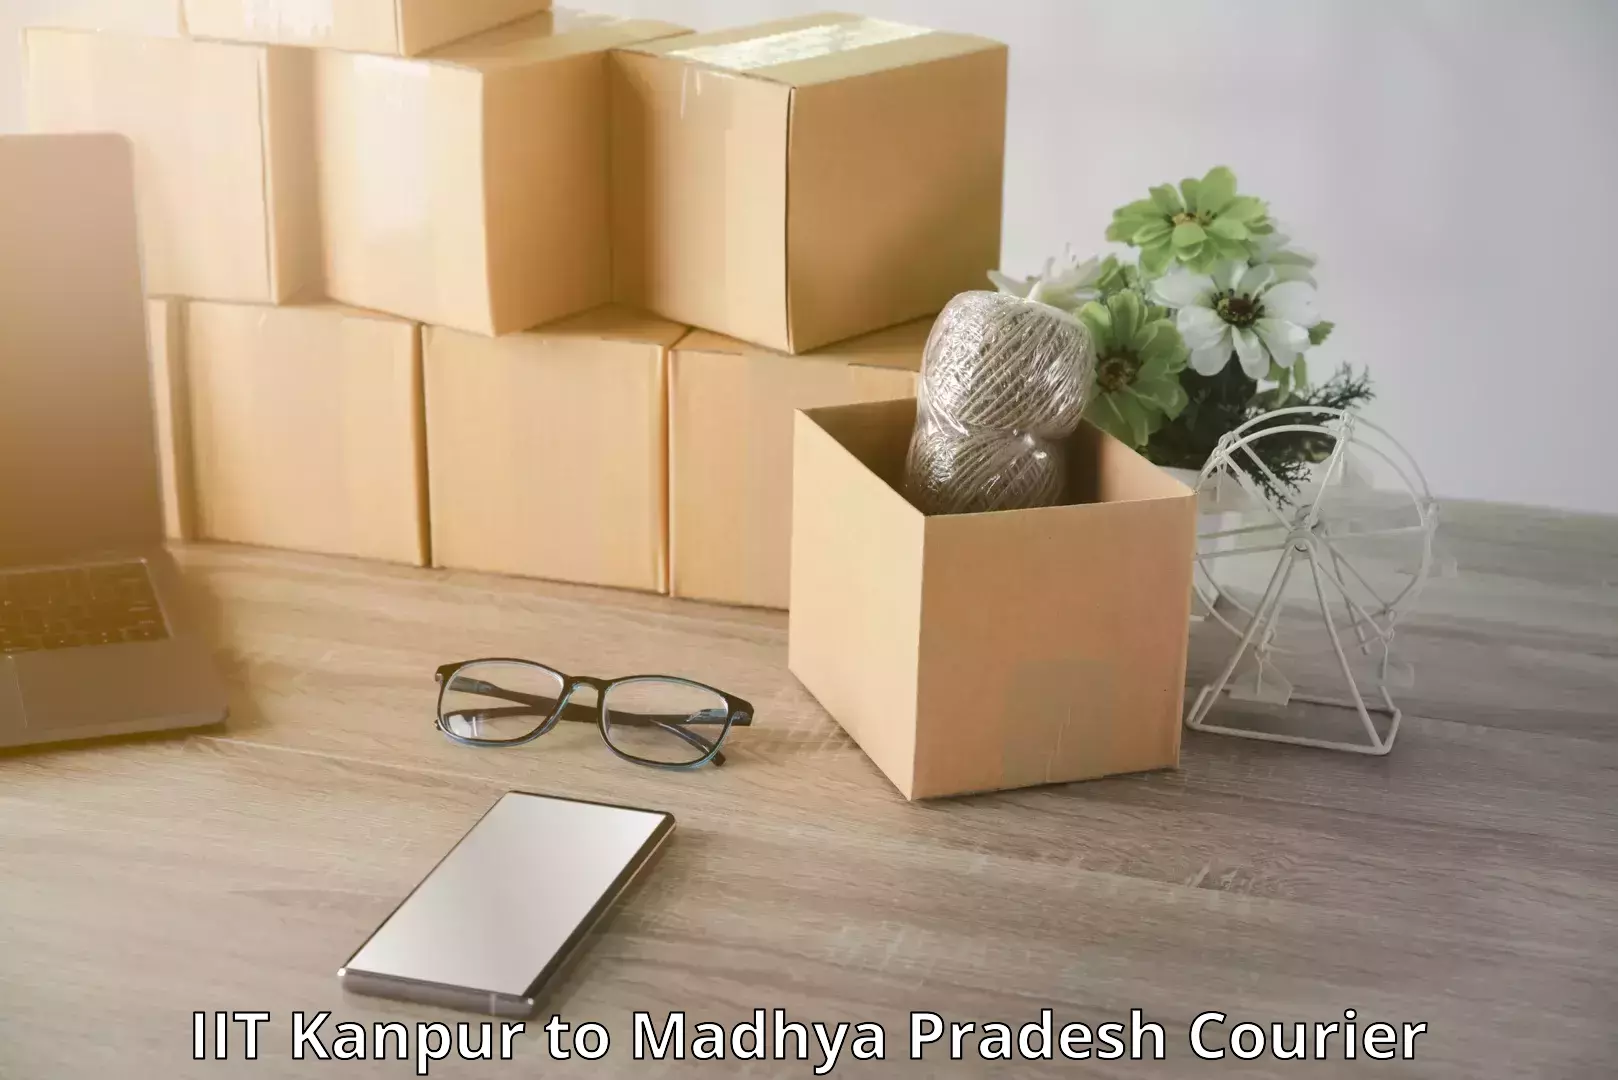 Luggage shipment specialists IIT Kanpur to Madhya Pradesh